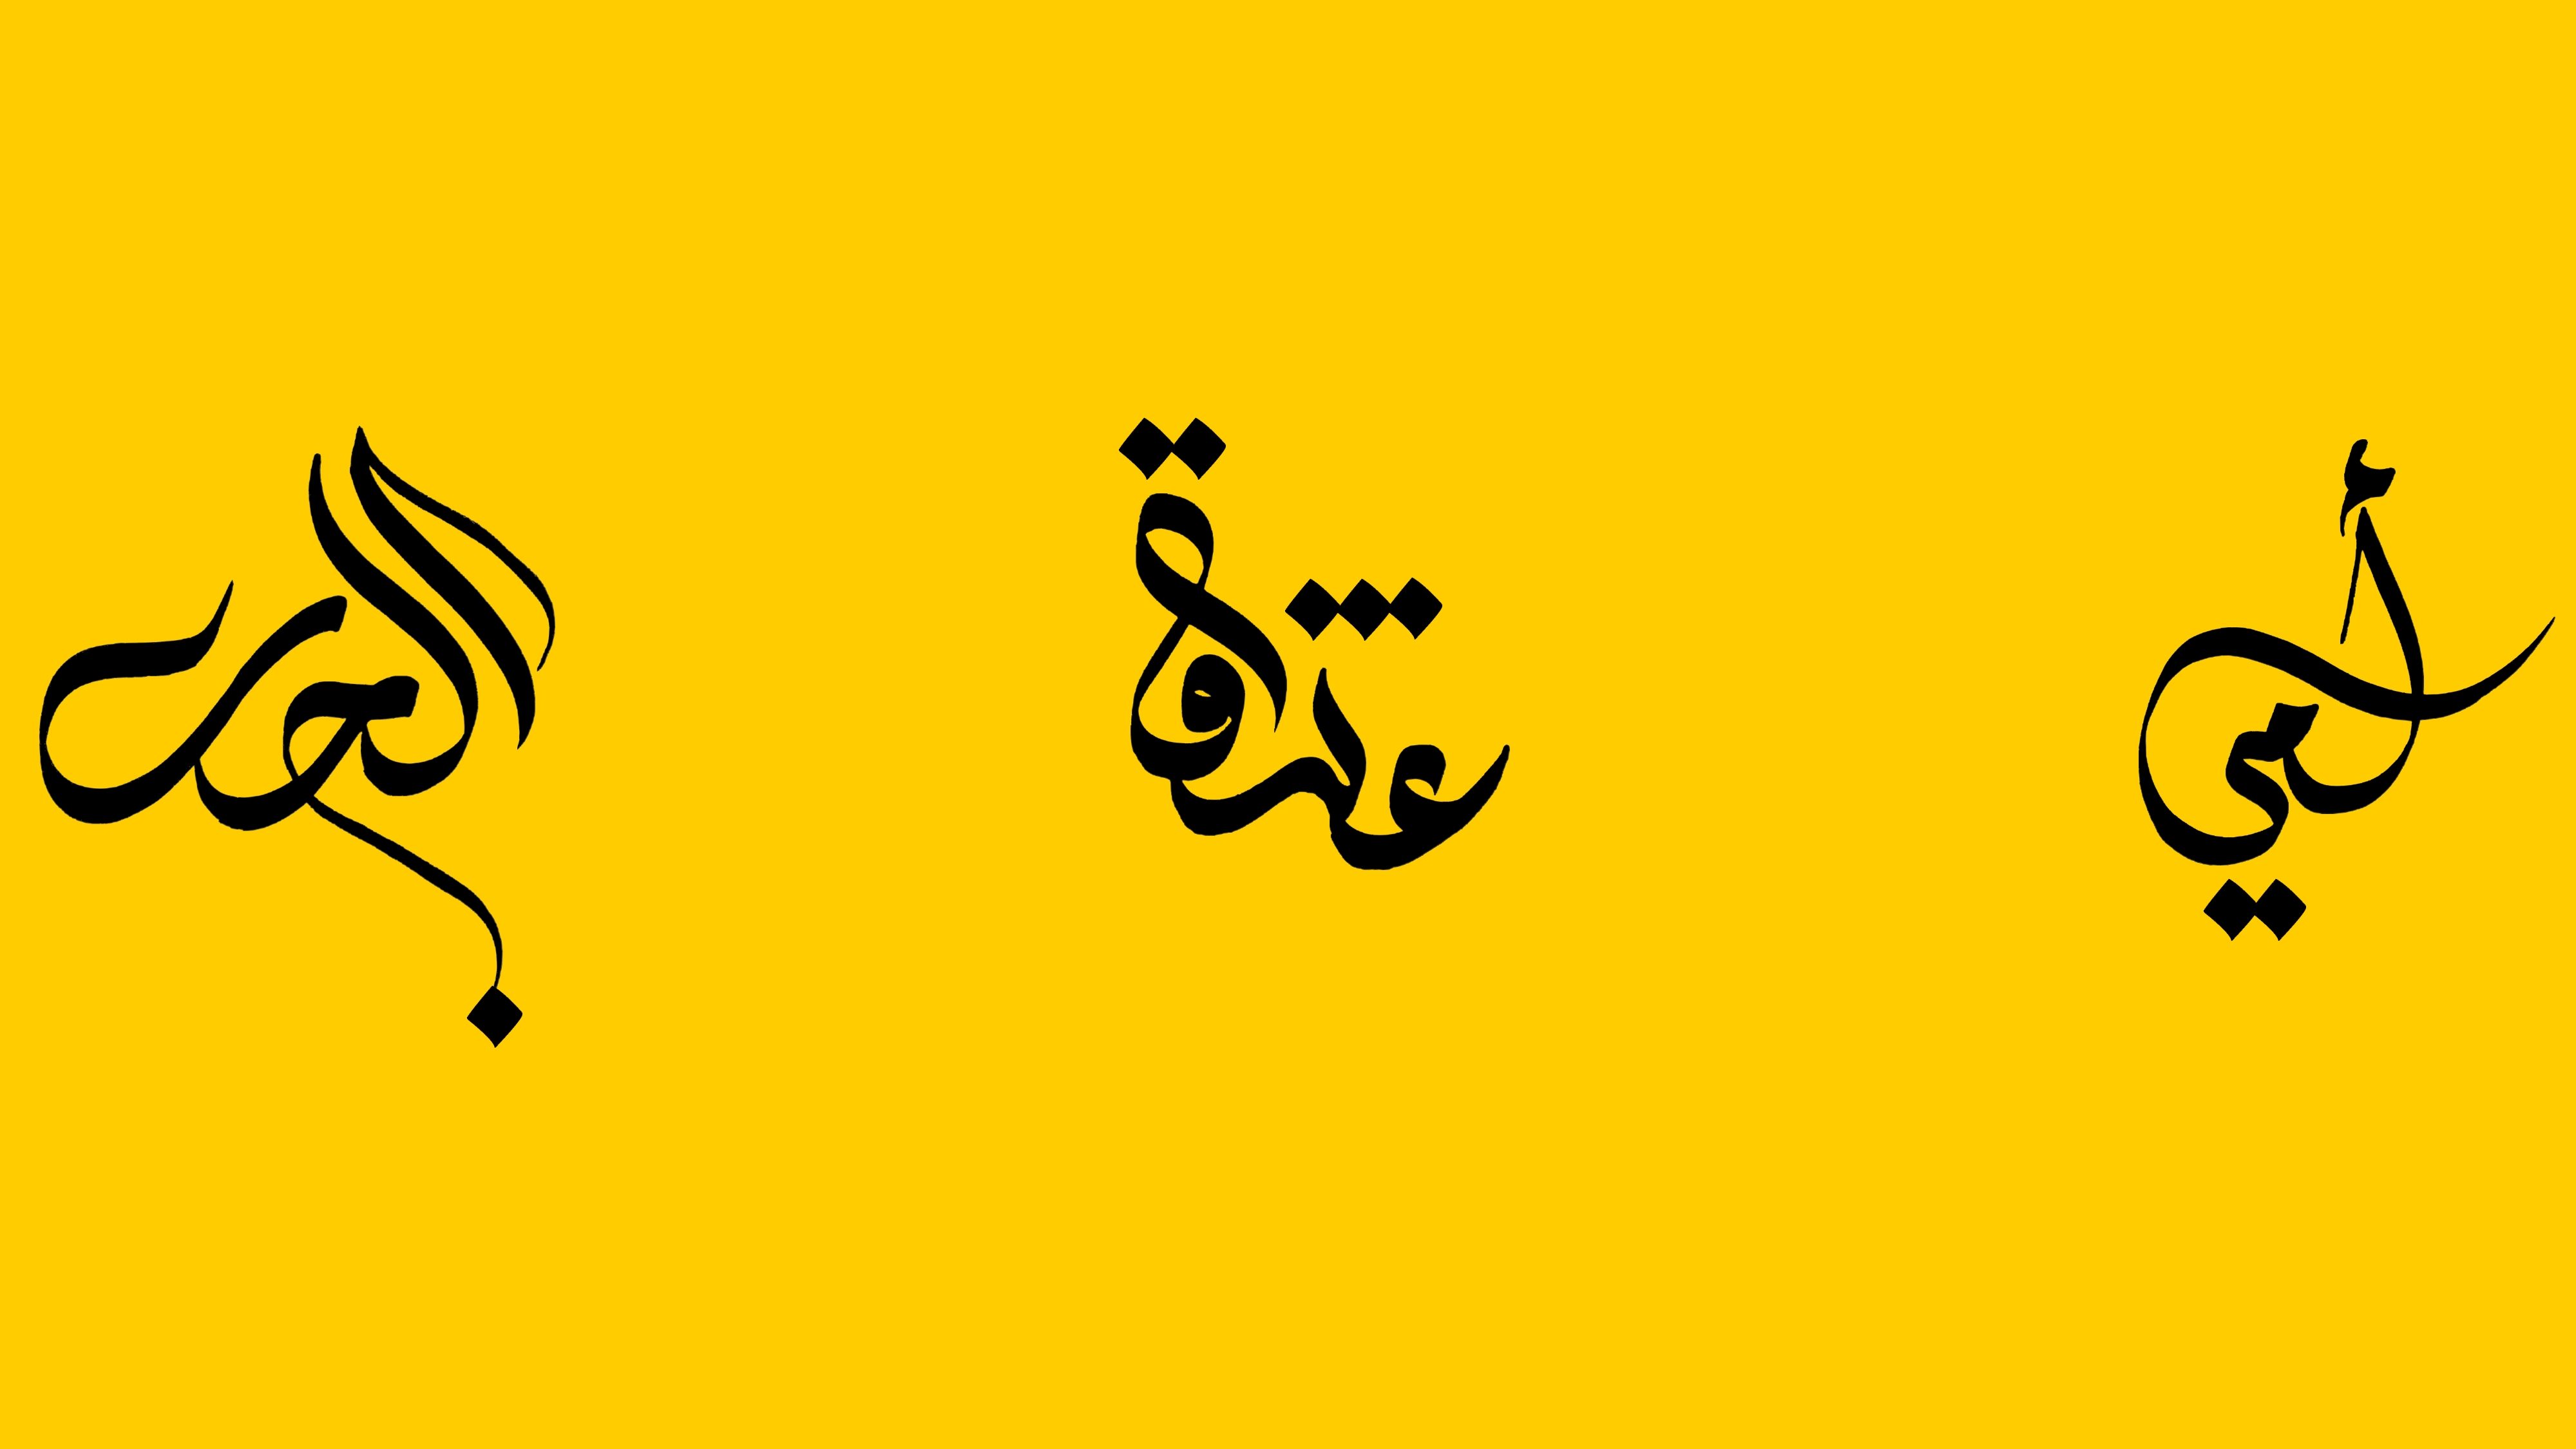 Calligraphie “Style” par Shaker Kashgari